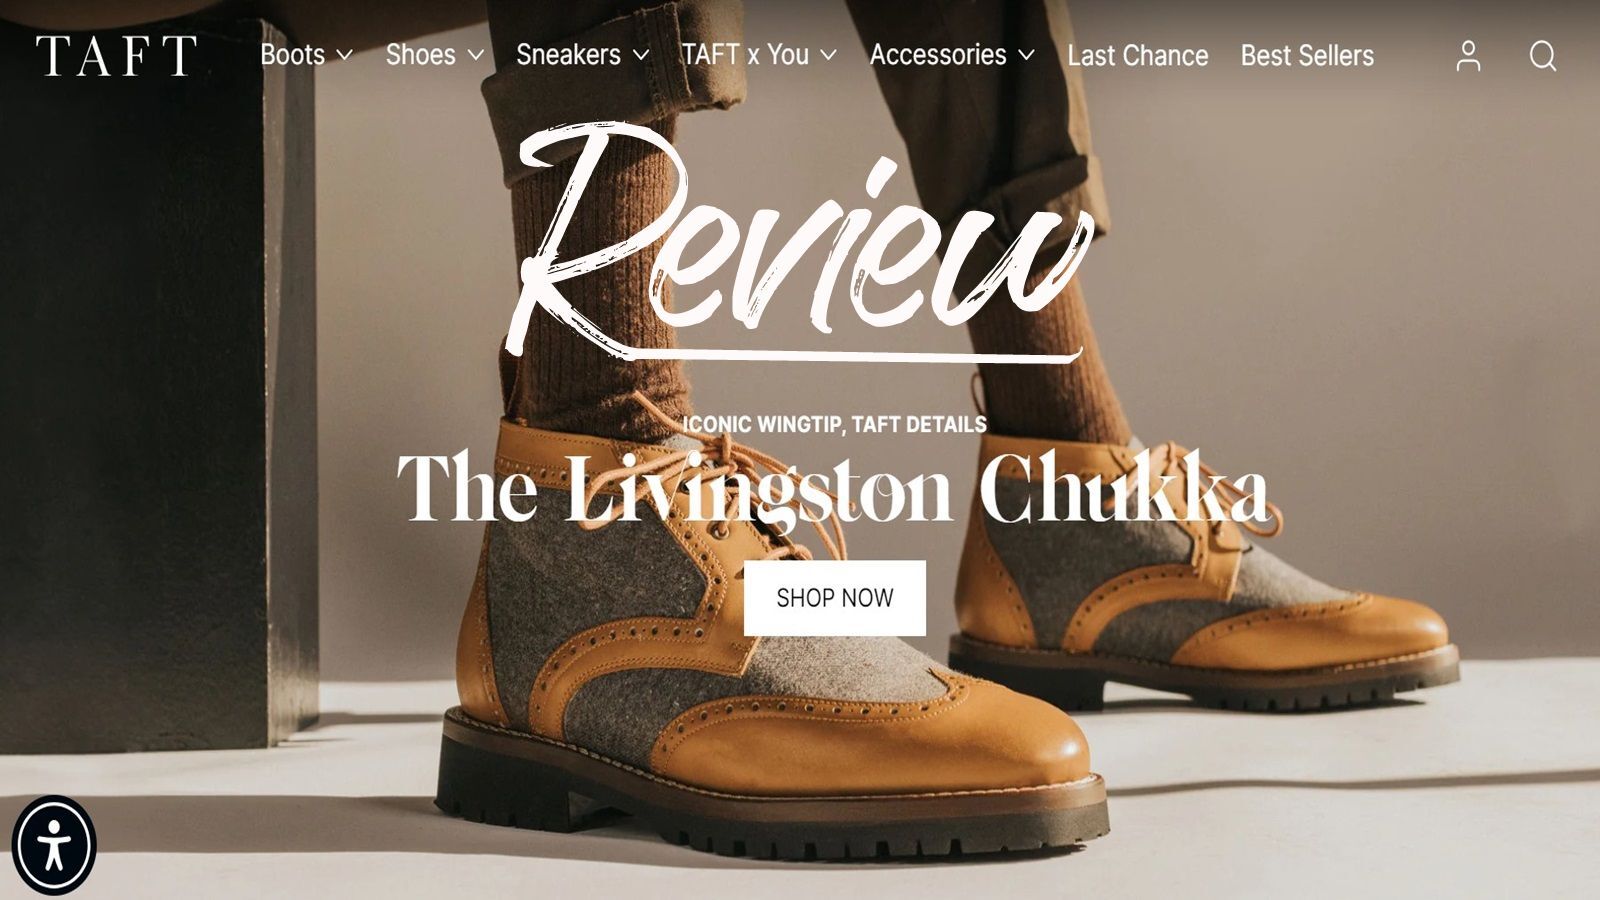 Taft Shoes Review: Exceptional Craftsmanship & Value Through Exclusive Deals